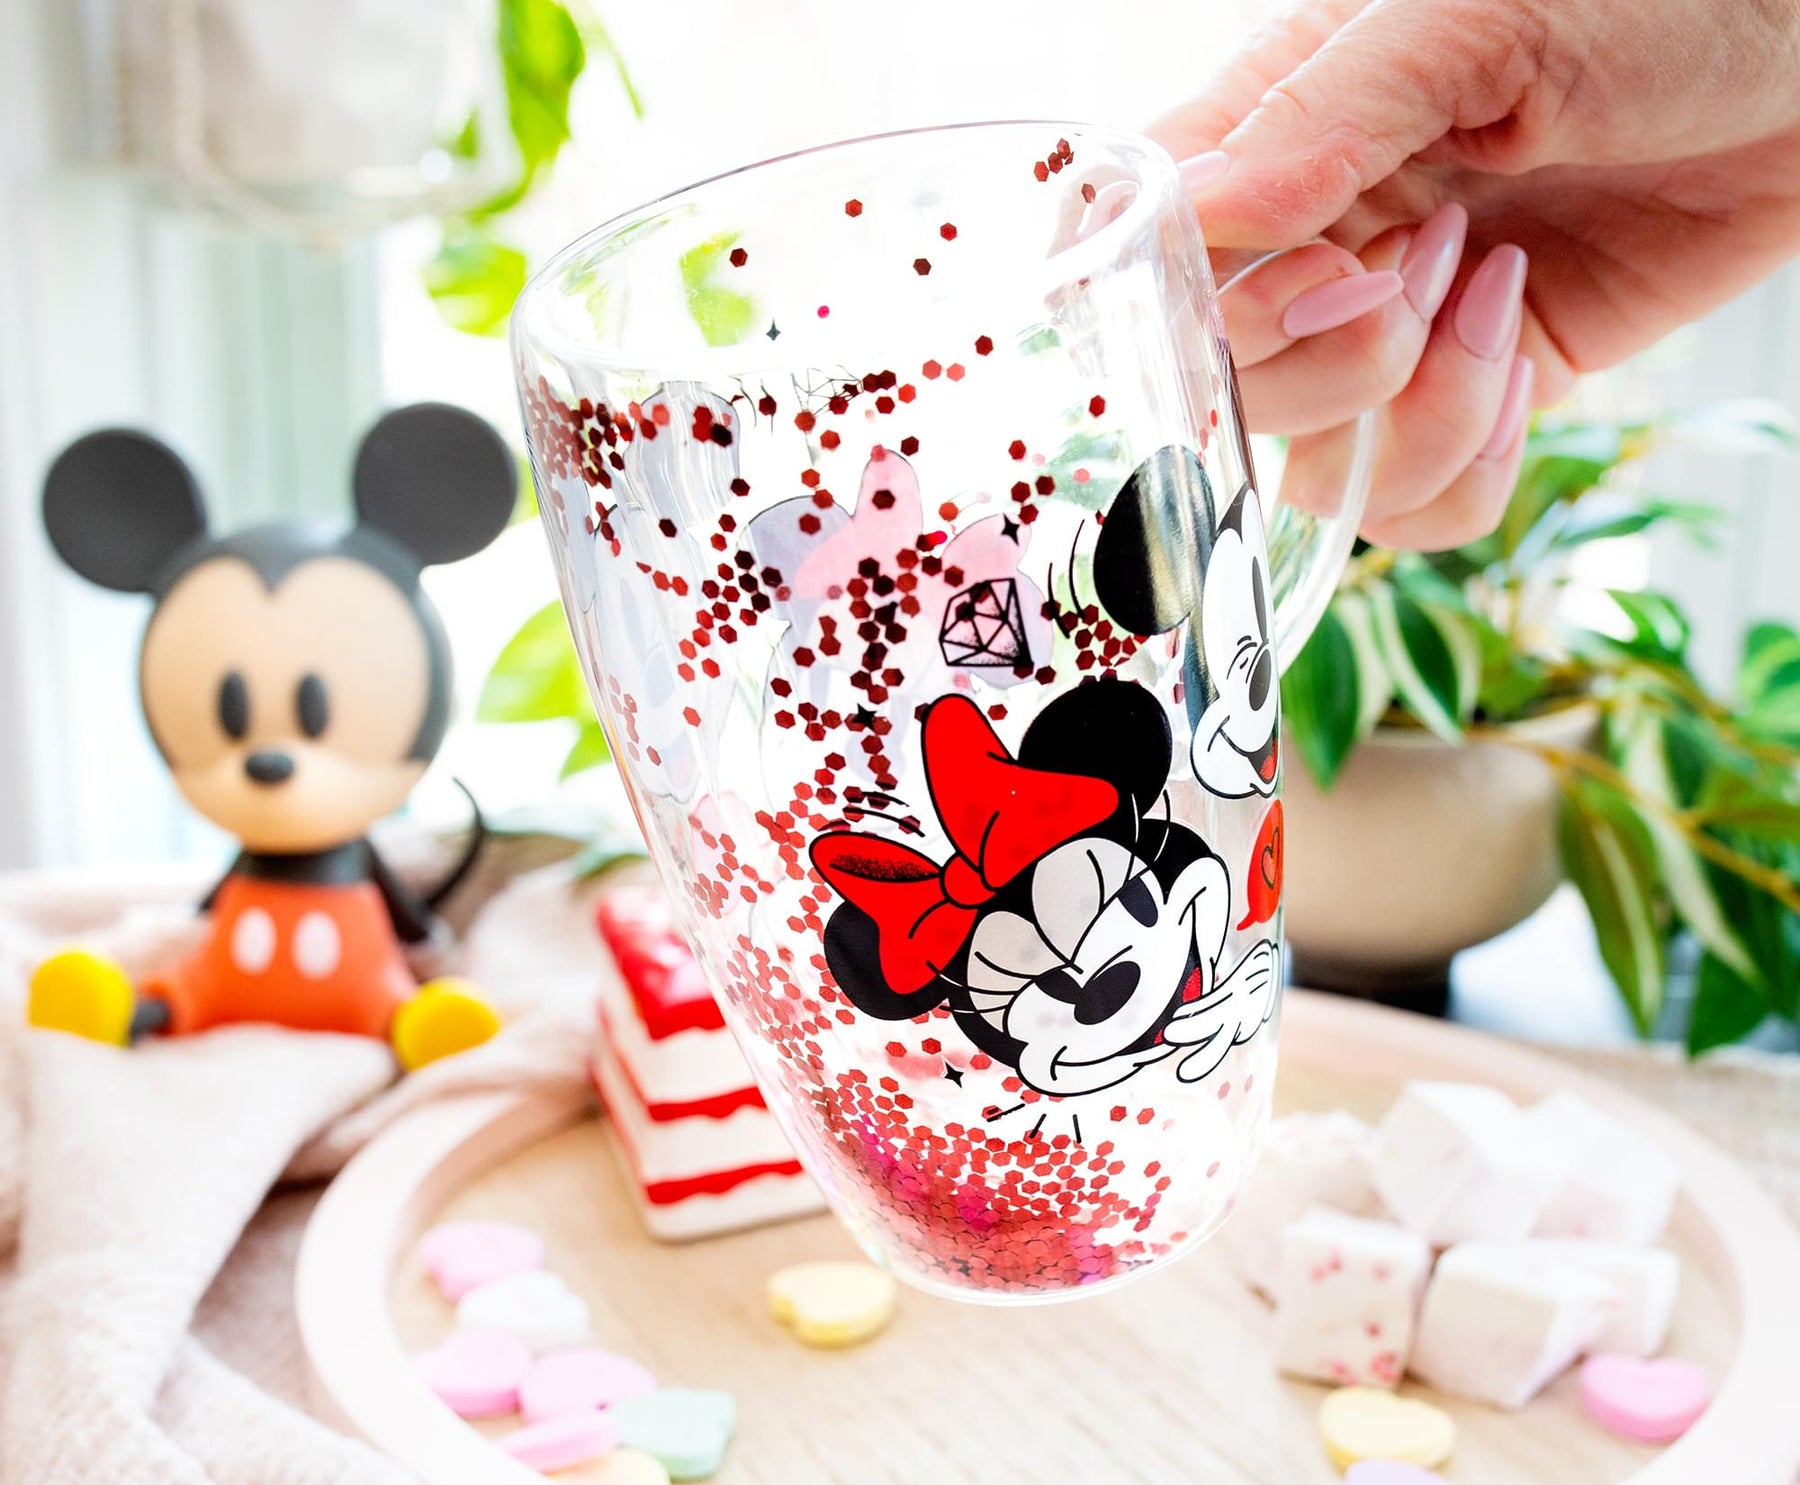 Silver Buffalo Disney Micky Minnie Heart Glitter Ceramic Coffee